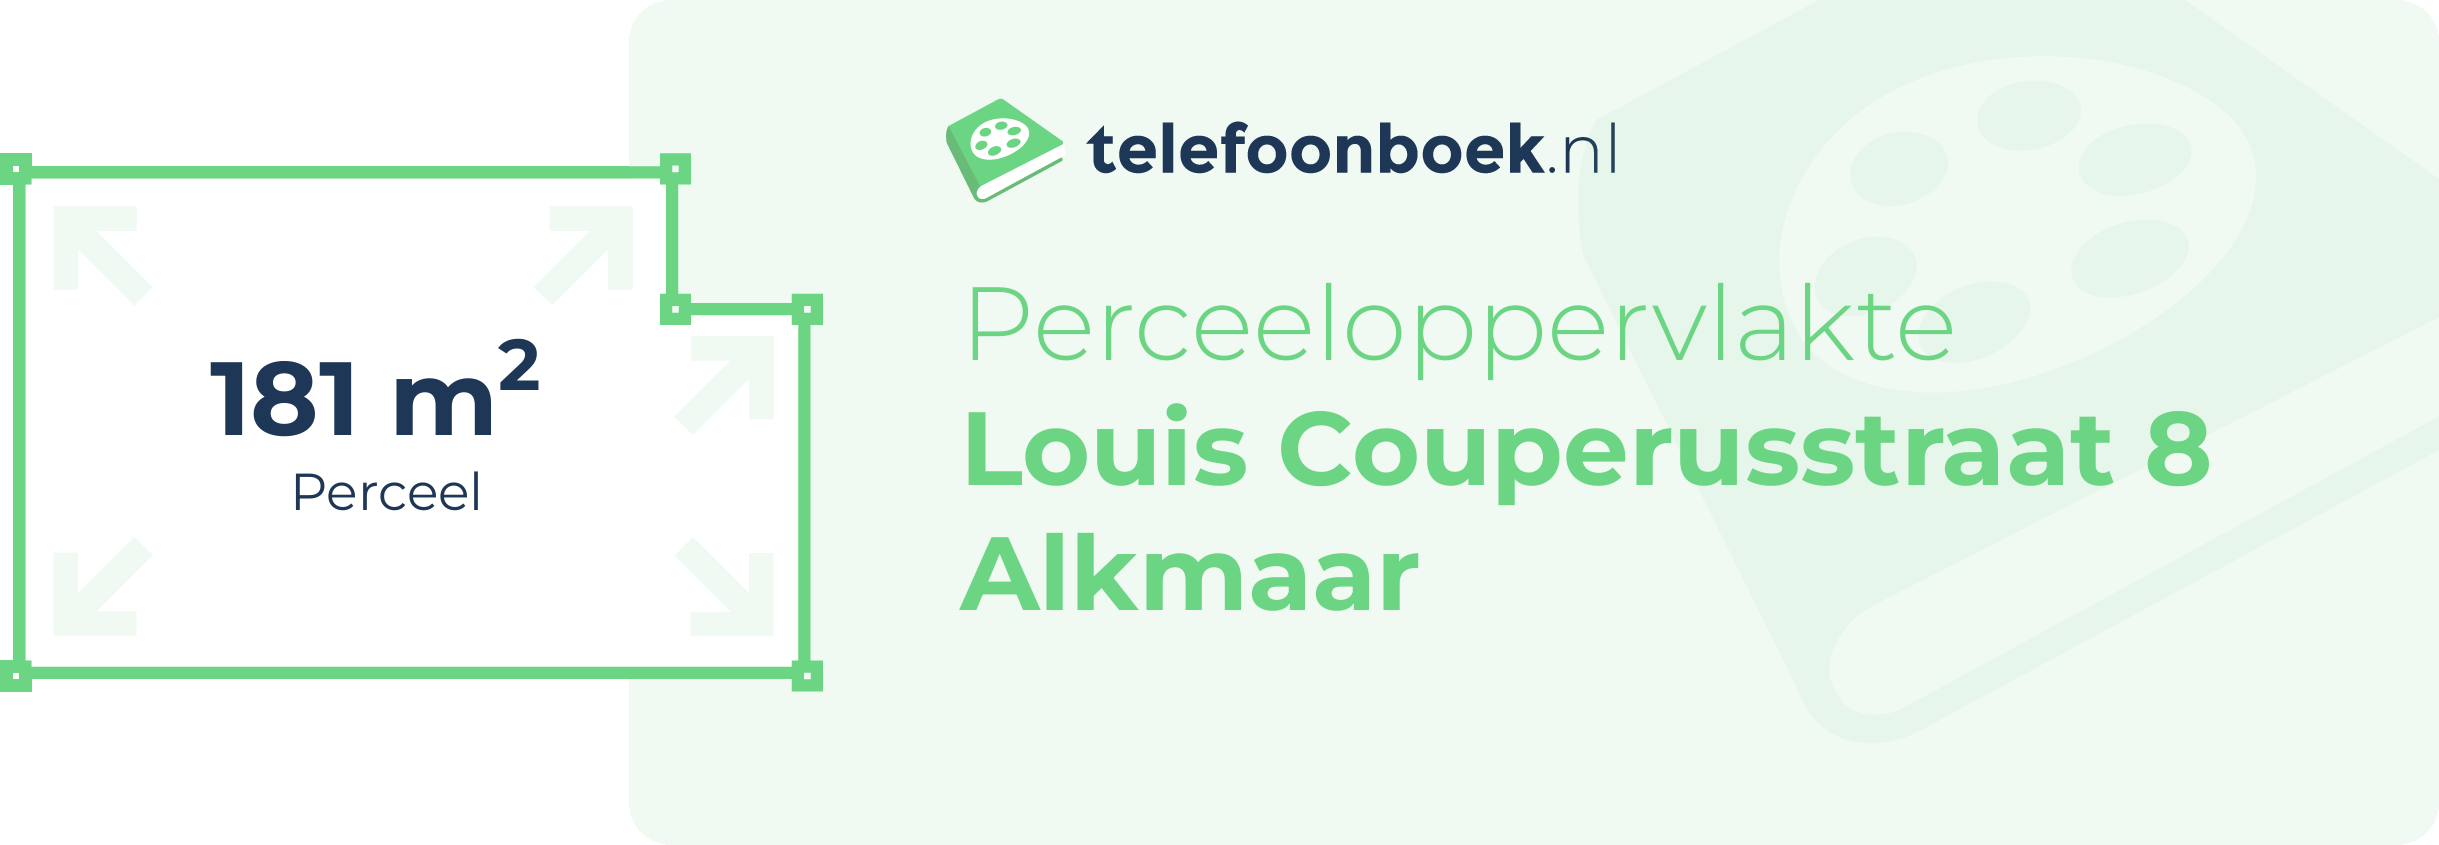 Perceeloppervlakte Louis Couperusstraat 8 Alkmaar